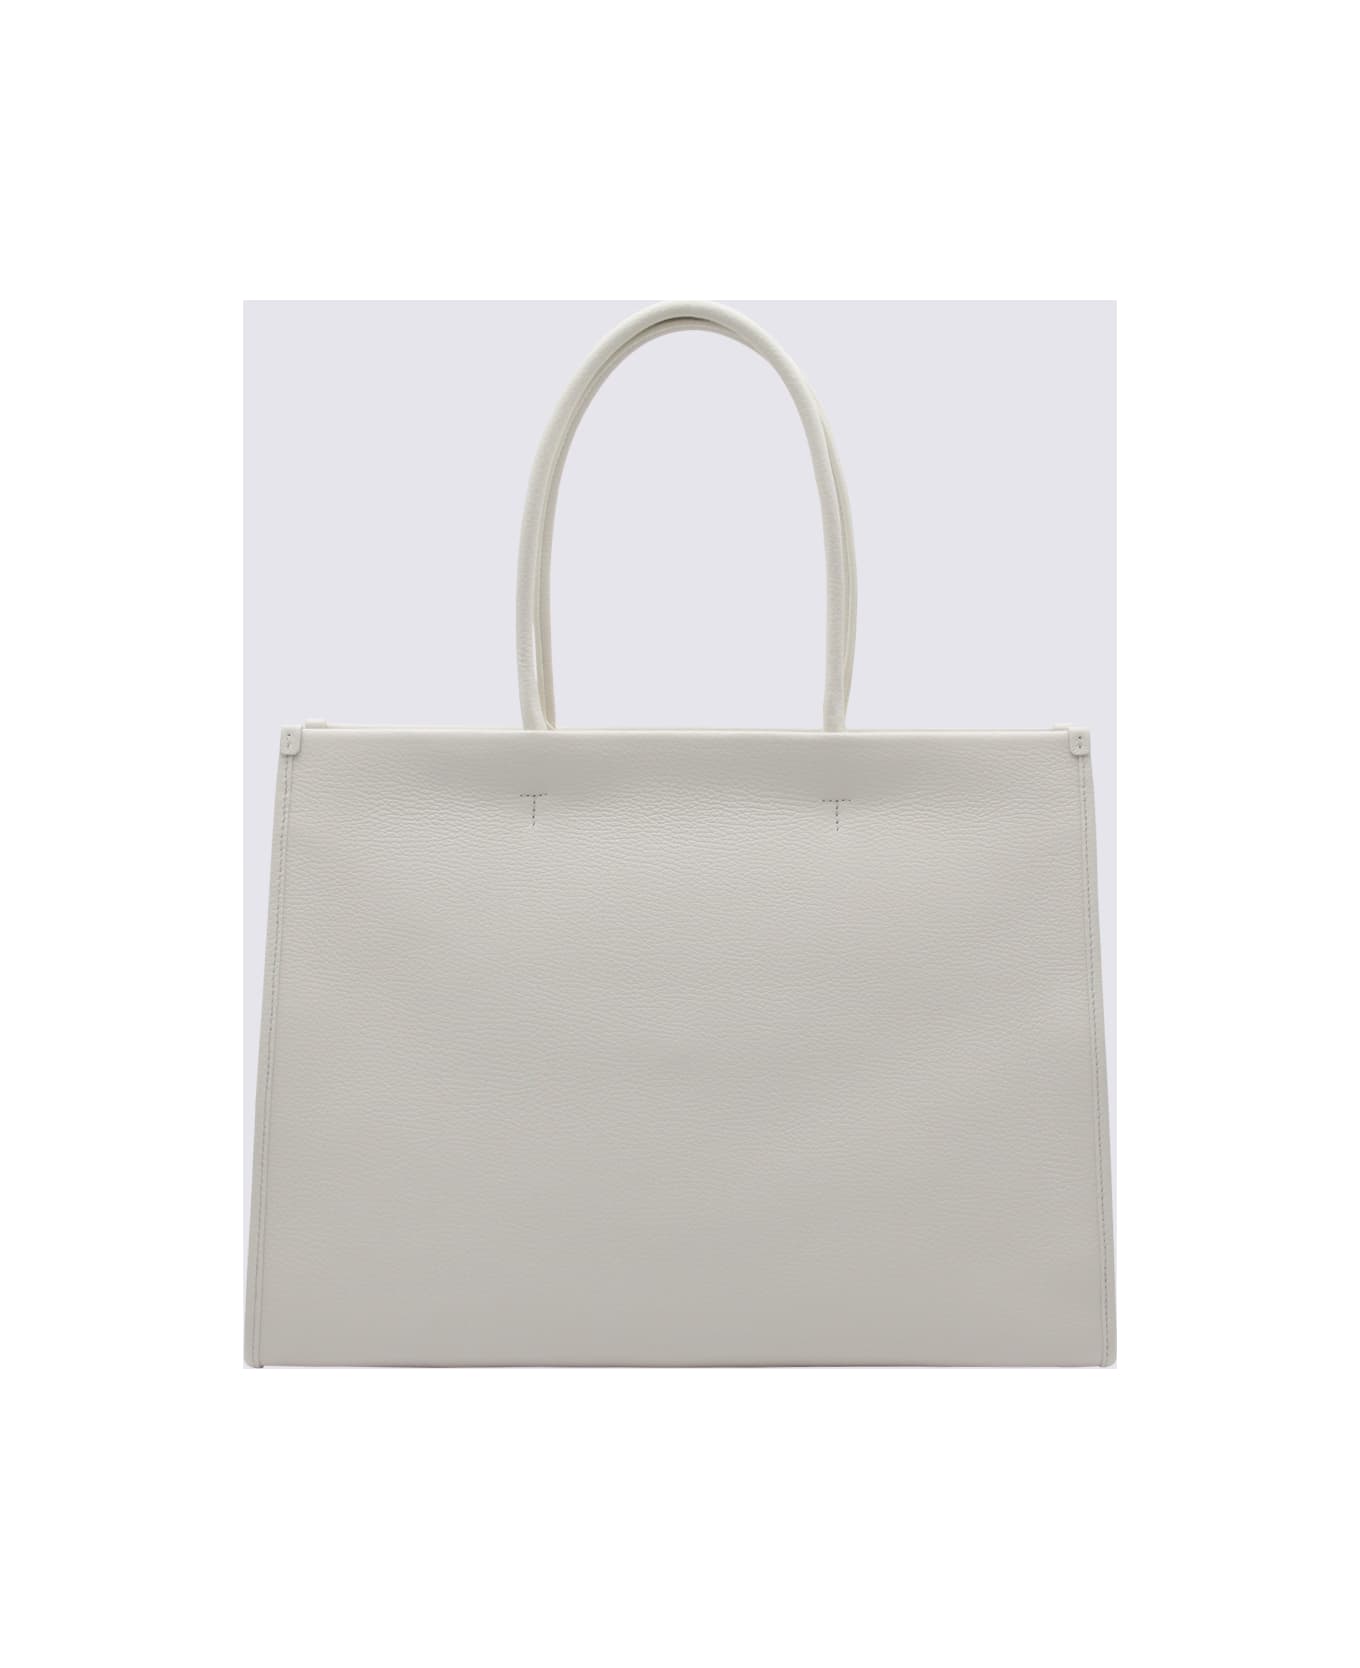 Furla Marshmallow Leather Opportunity Tote Bag - White/Black